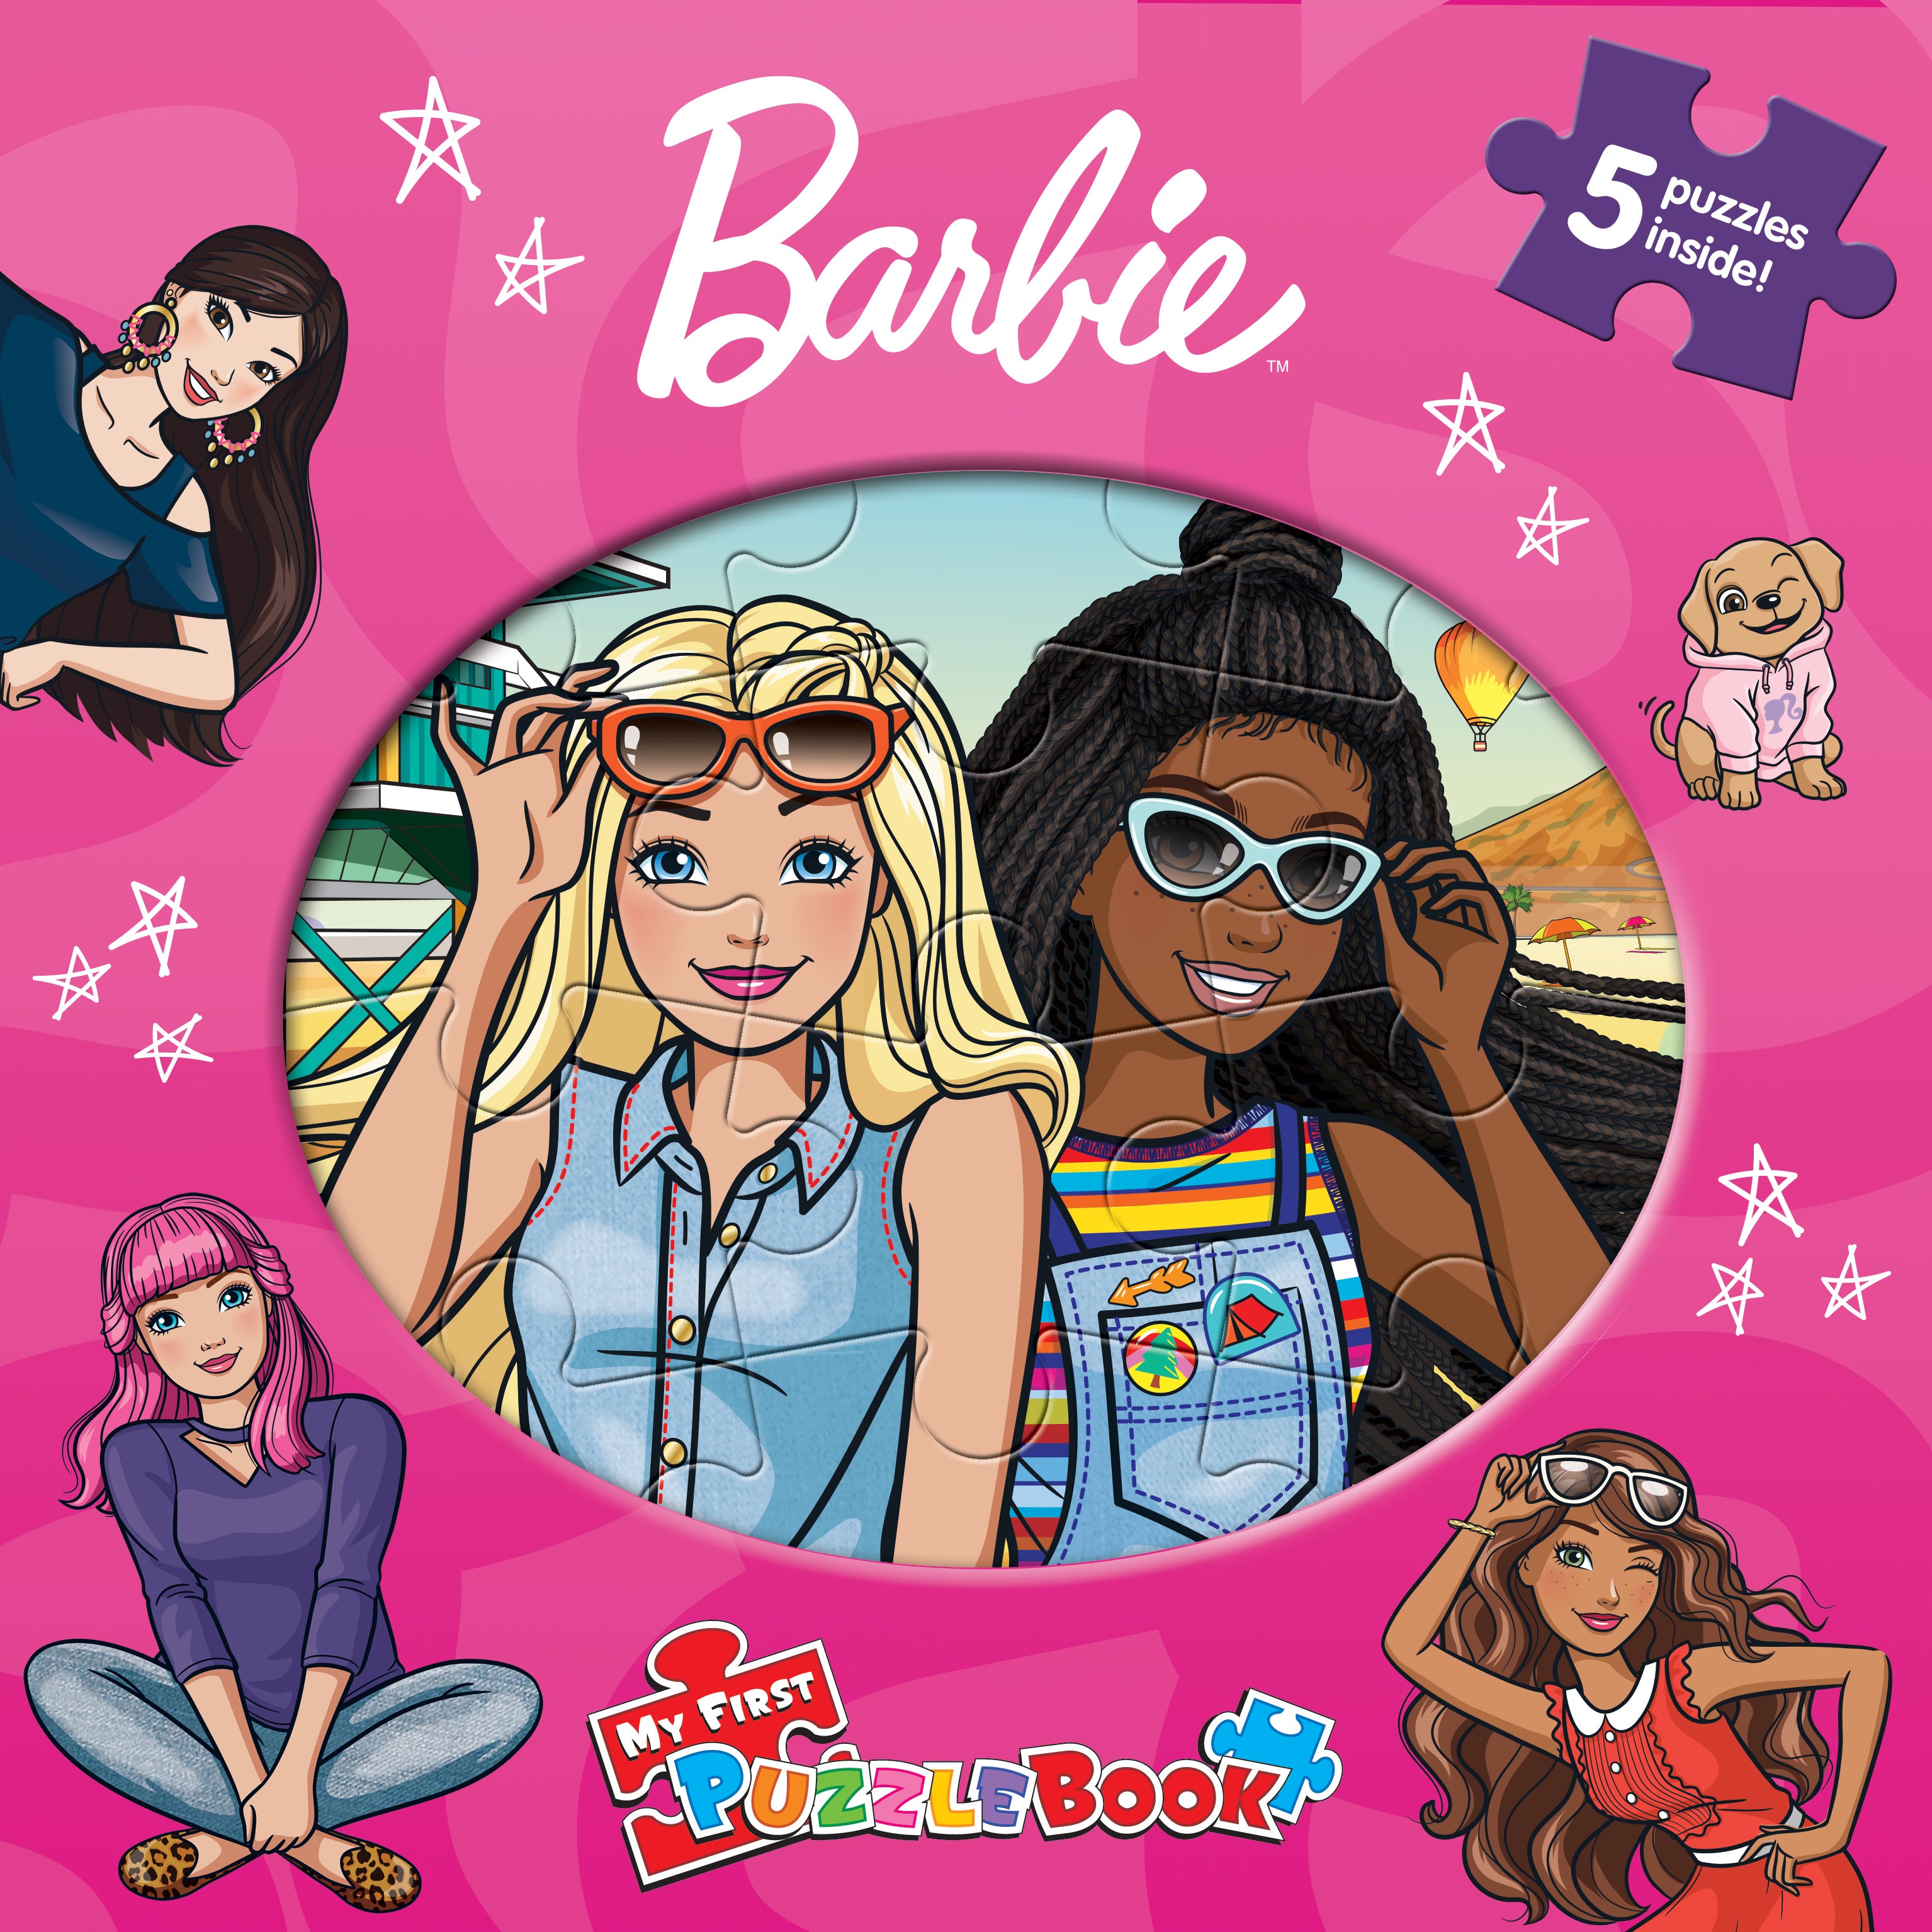 Barbie puzzle book, Barbie jigsaws, Barbie Malibu puzzle book – Phidal